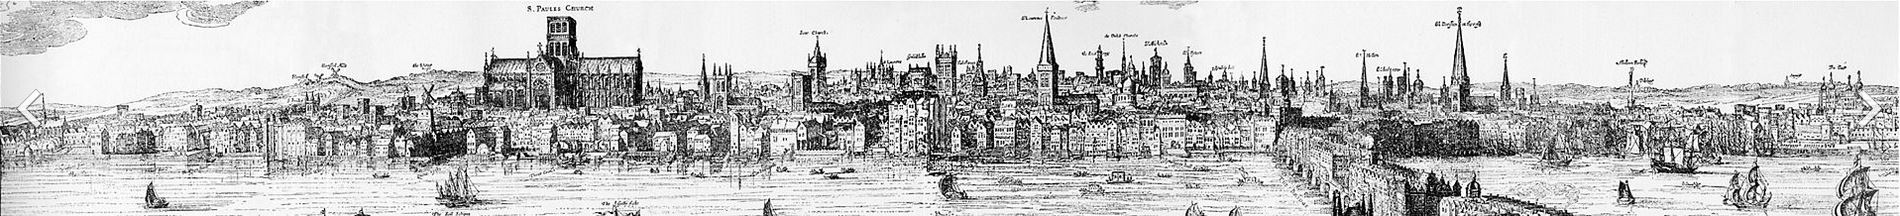 panorama of london 1600s